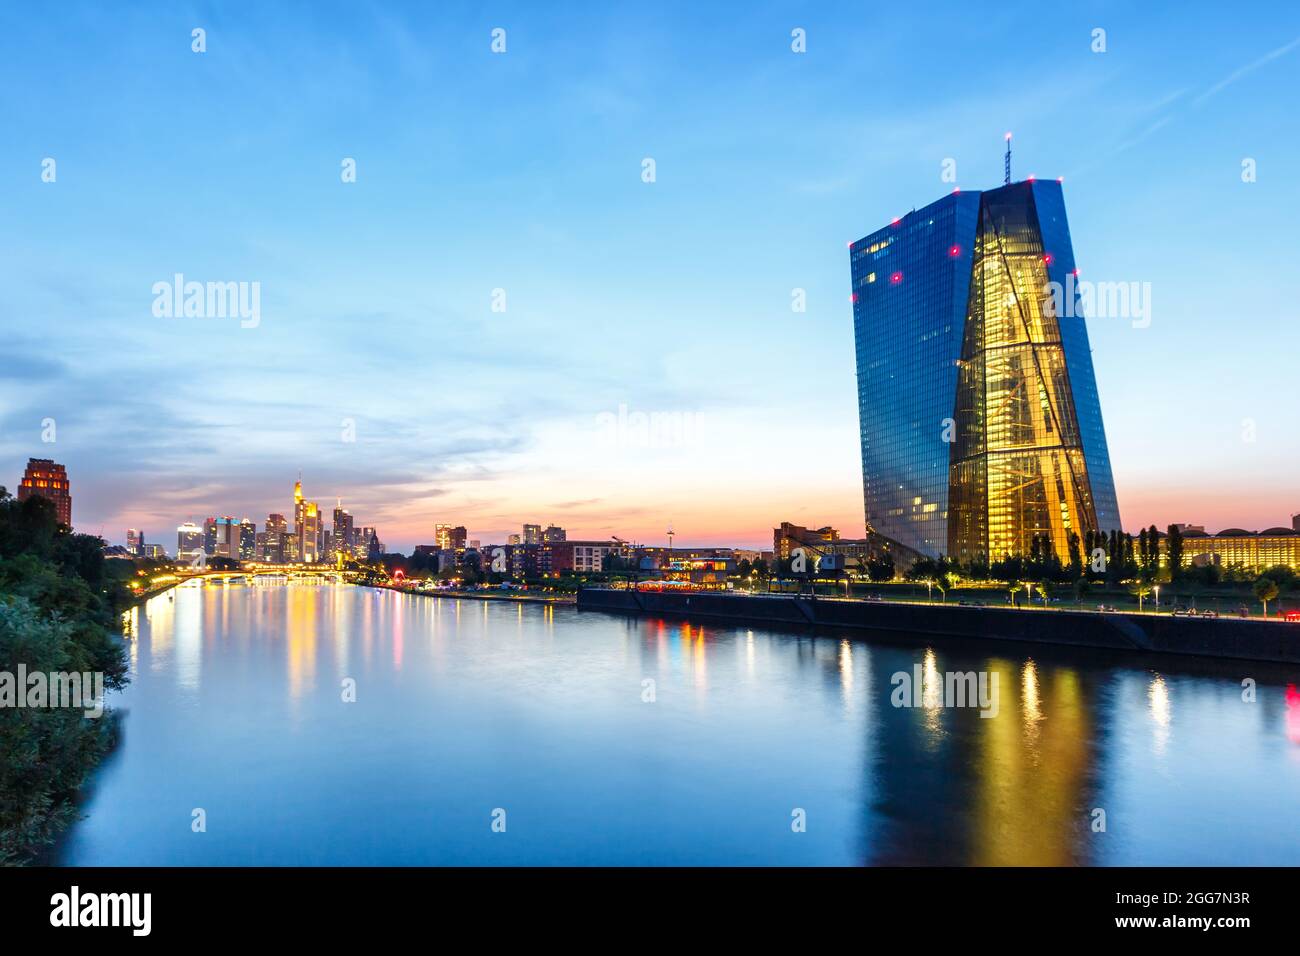 Frankfurt skyline with ECB European Central Bank Main river skyscraper in Germany twilight Stock Photo